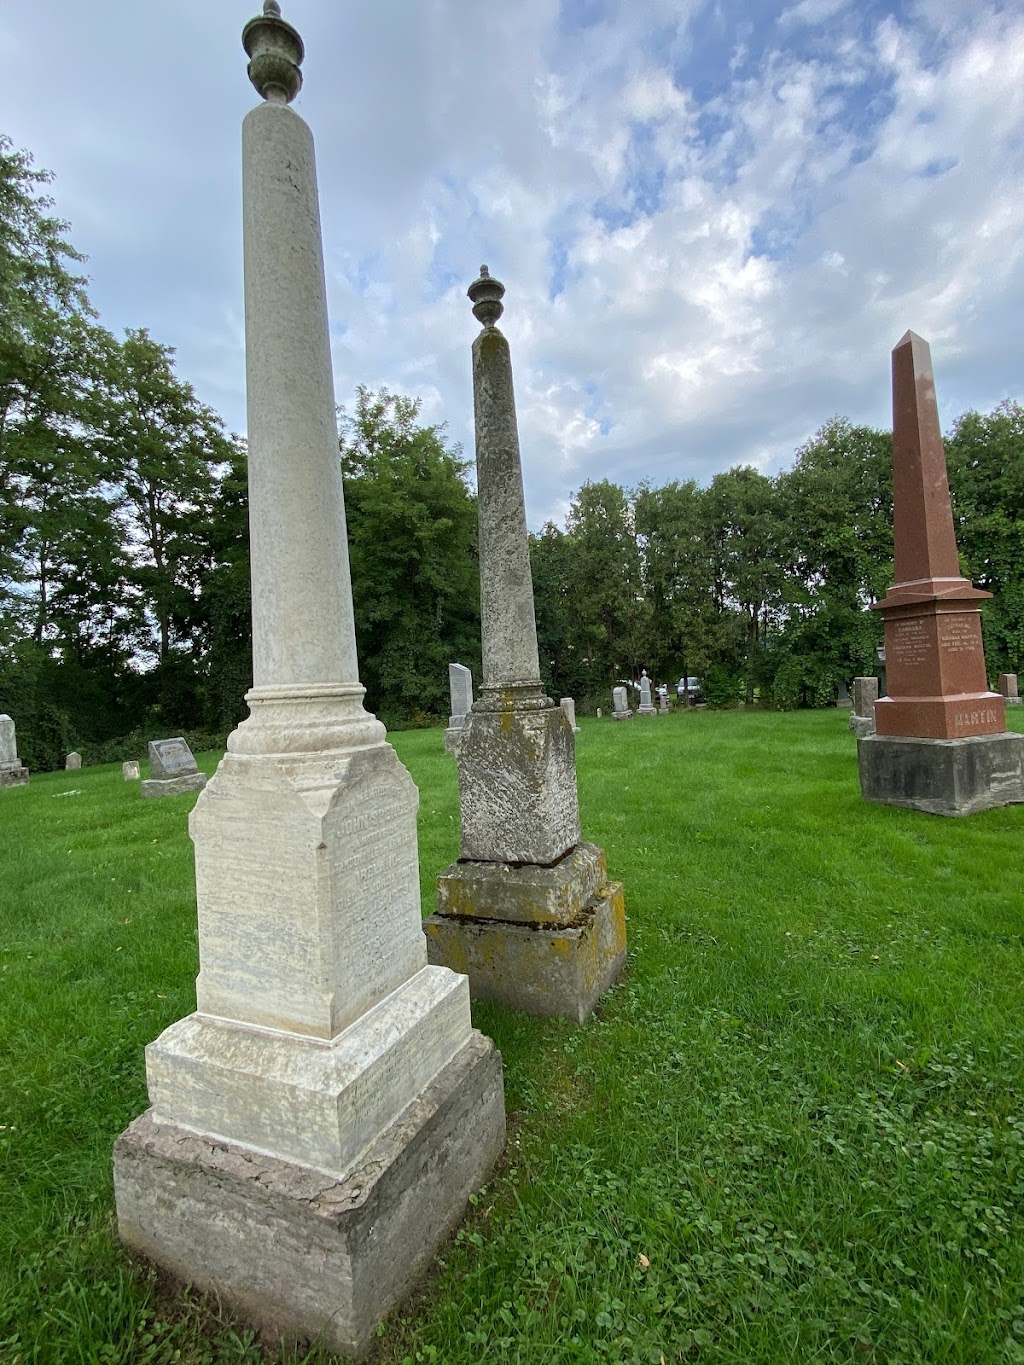 Oaklawn Cemetery | 4100 Bridgeport Dr, Jordan Station, ON L0R 1S0, Canada | Phone: (905) 563-8205 ext. 247